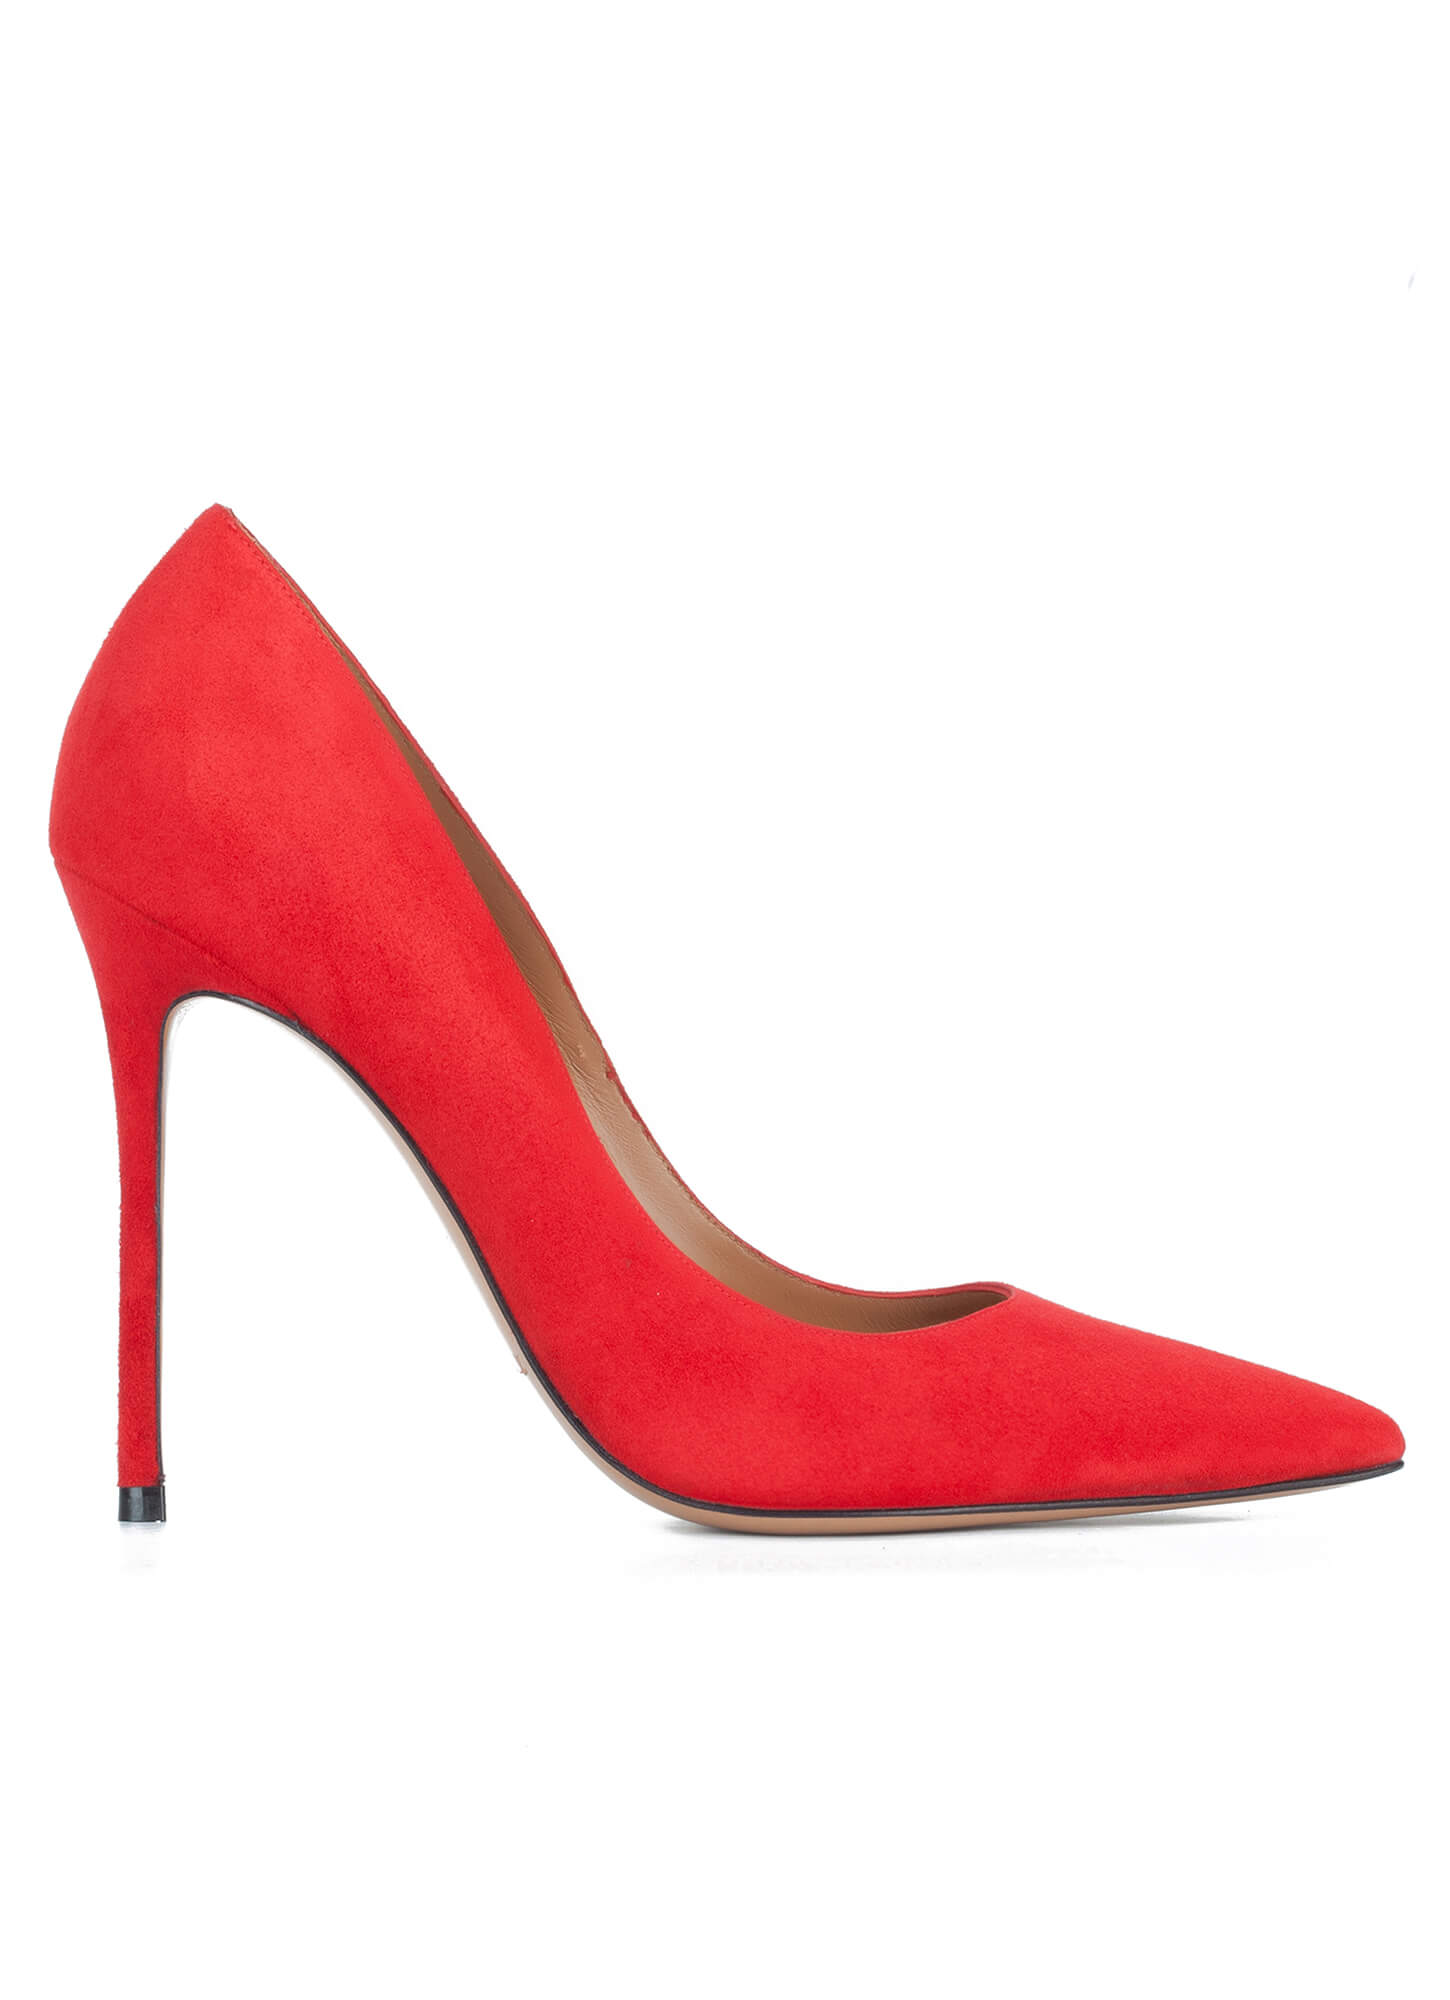 Zapatos de con tacón stiletto en ante rojo . PURA LOPEZ